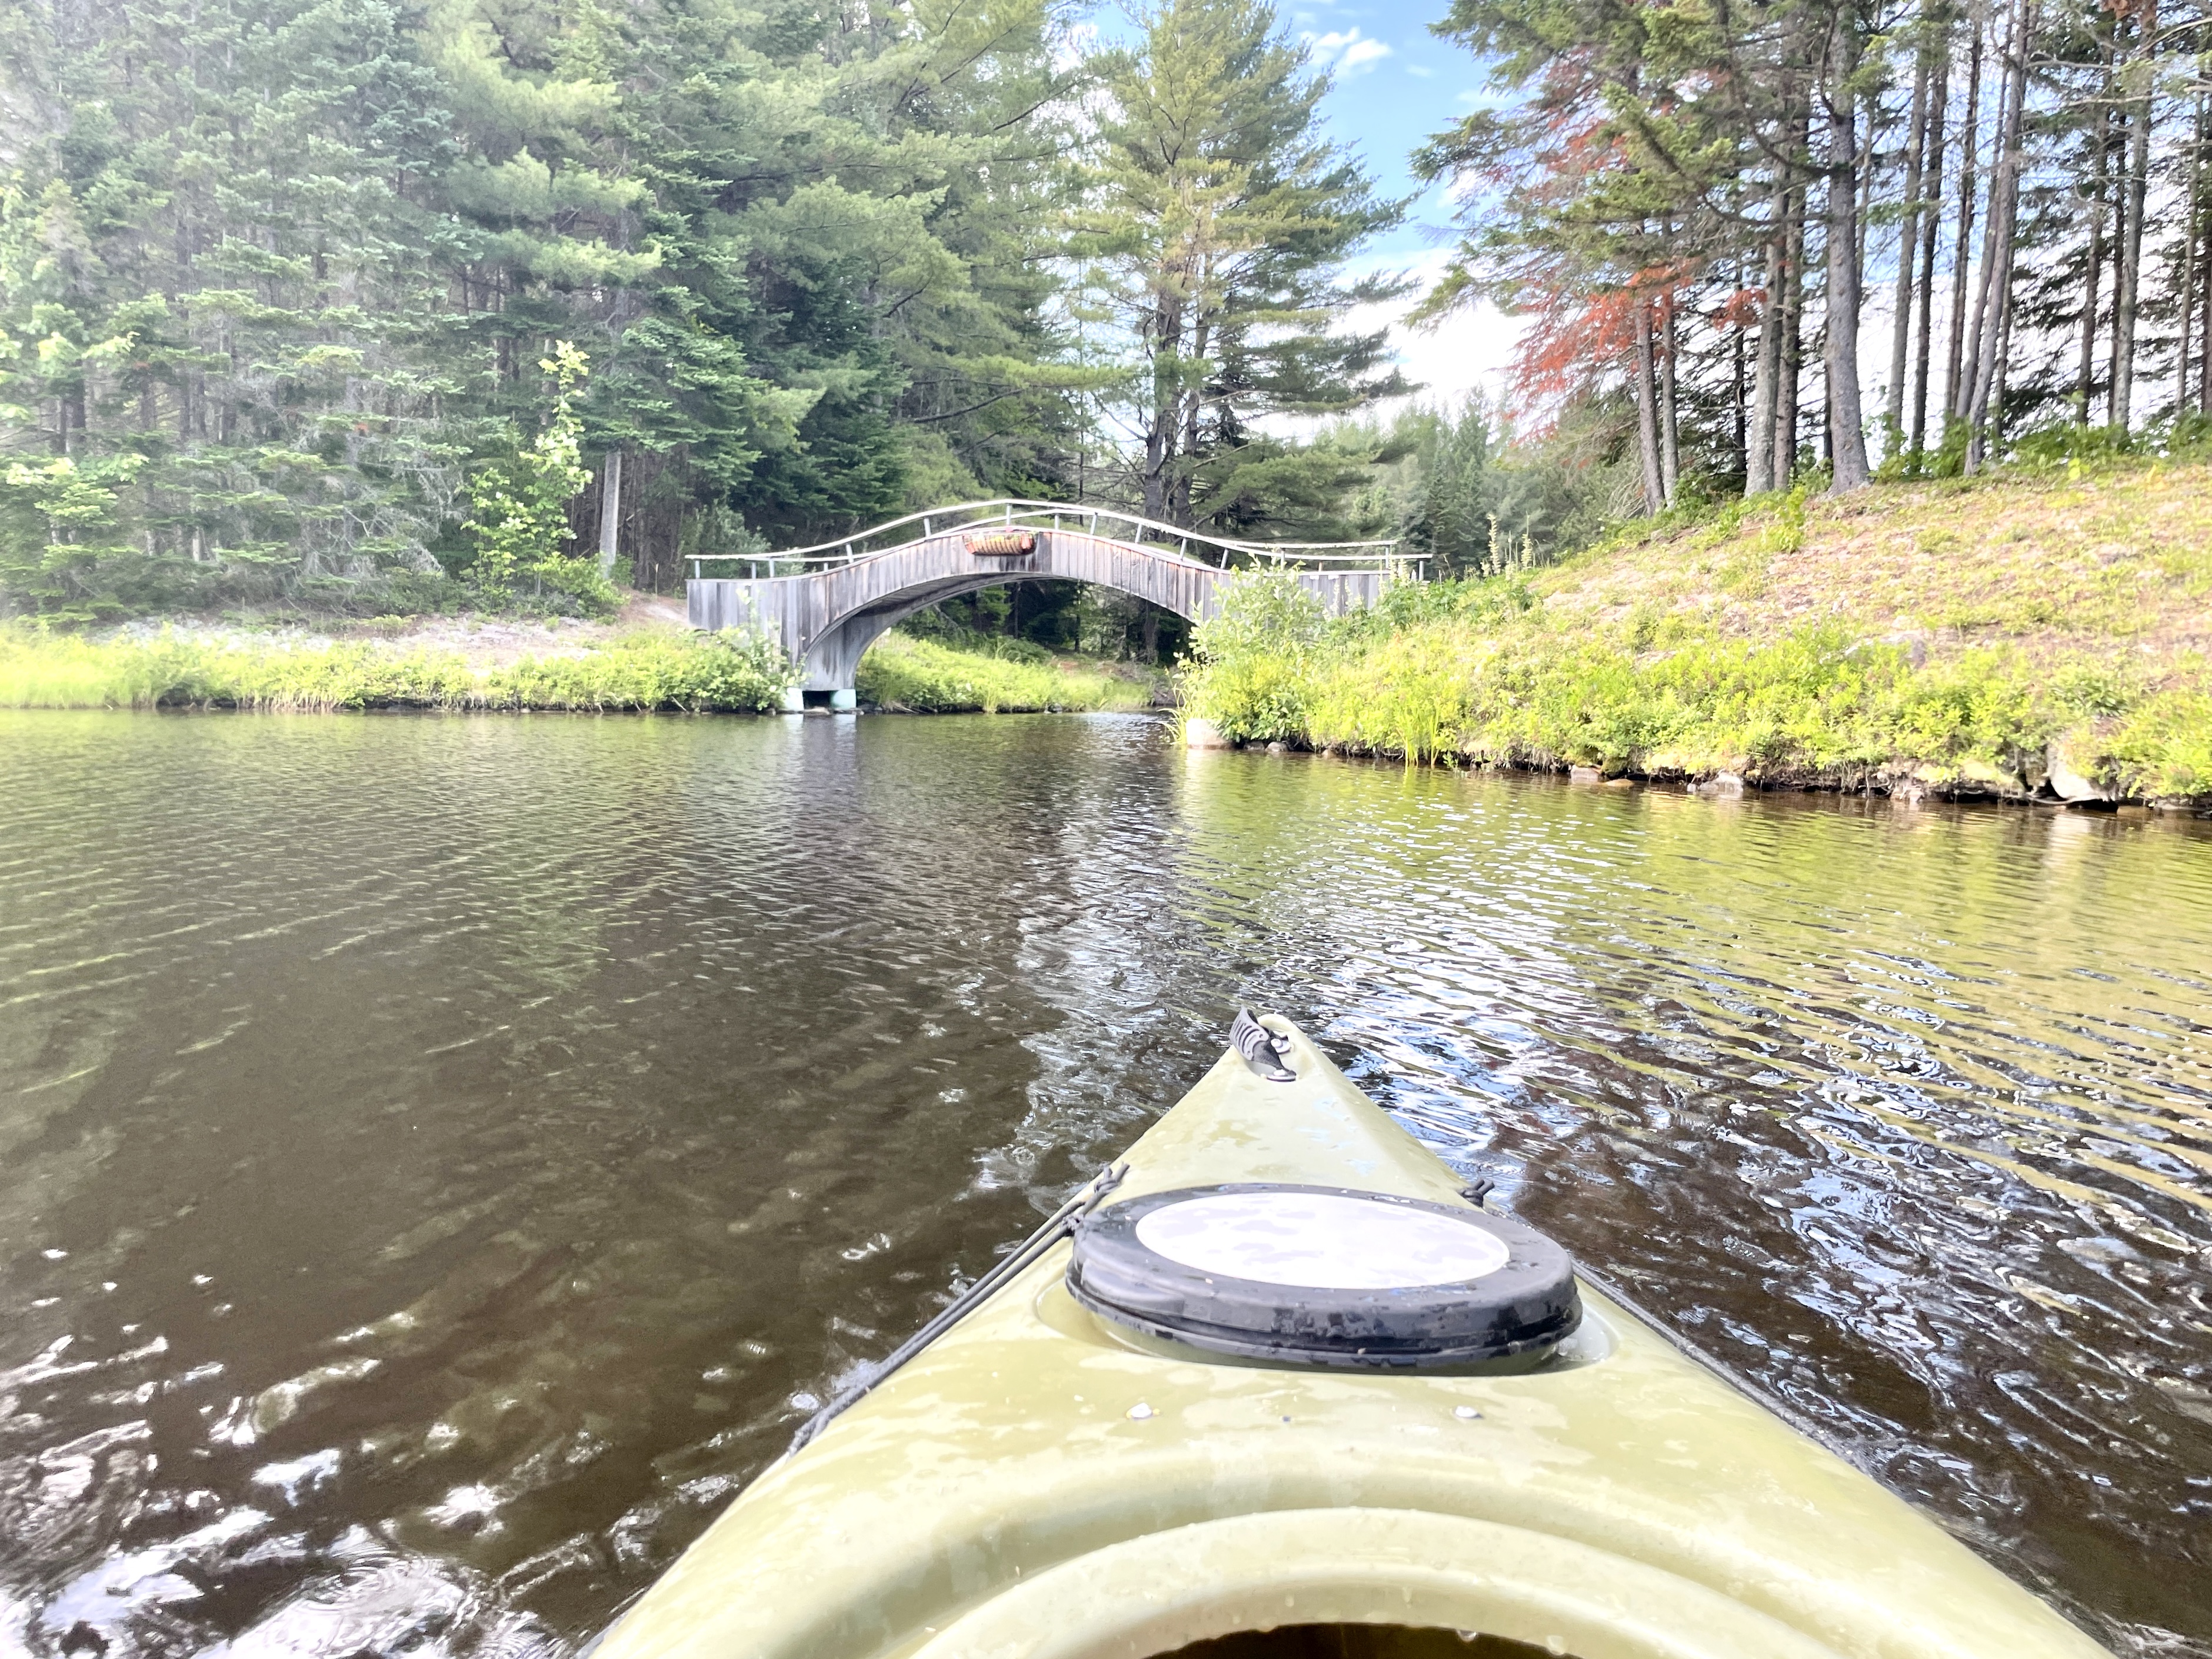 Kayak in a river in New Hampshire, facing a foot bridge.